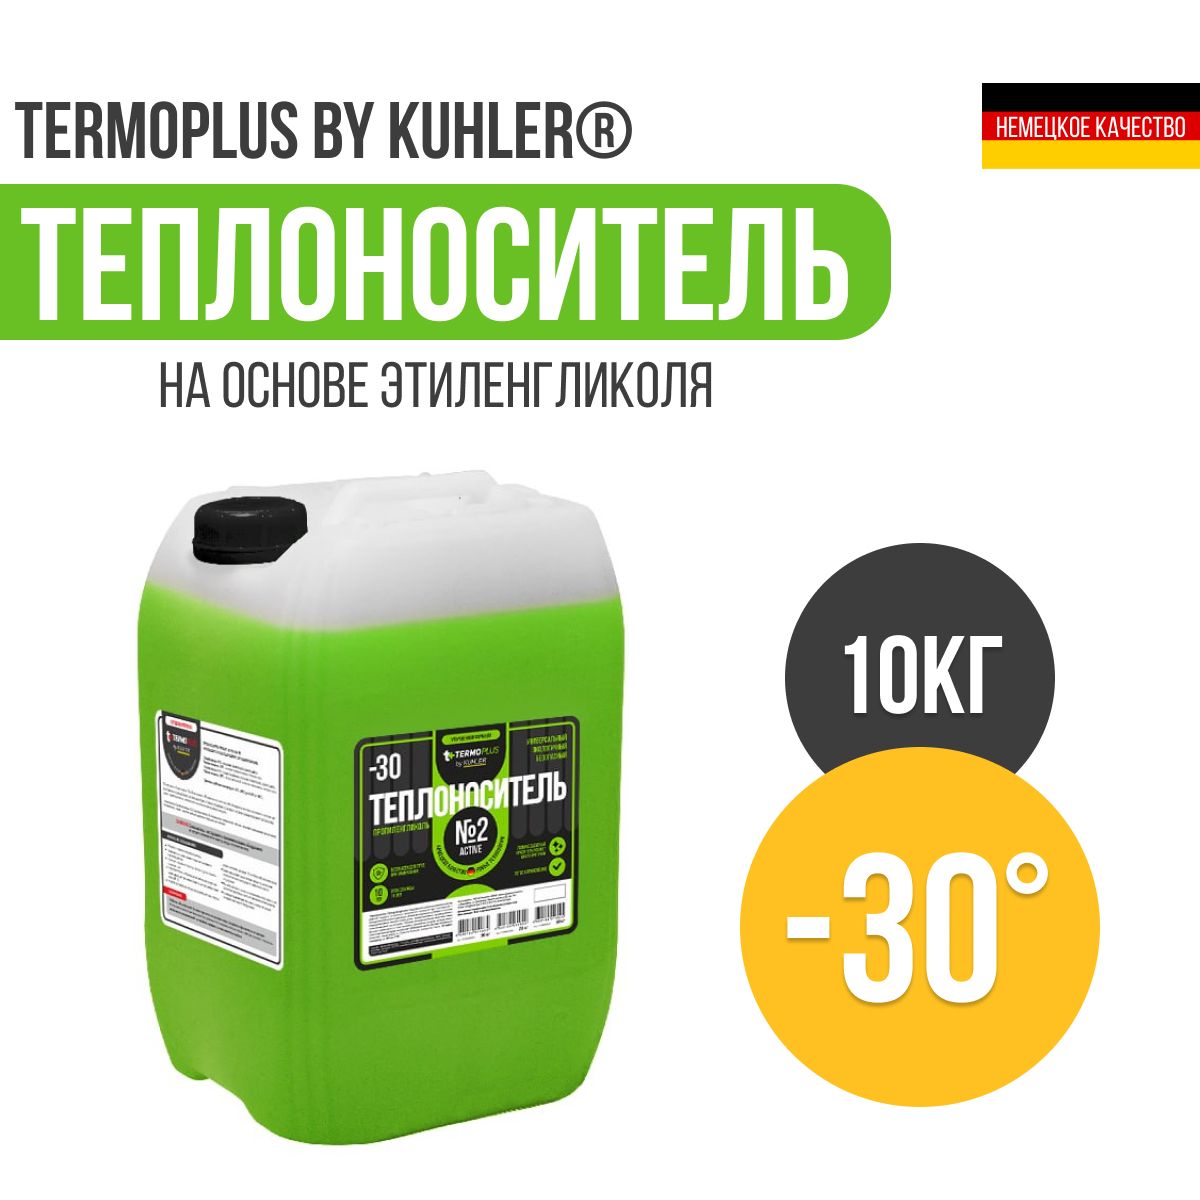 Теплоноситель 2 Active Теrmoplus by Kuhler пропиленгликоль -30 (10 кг)